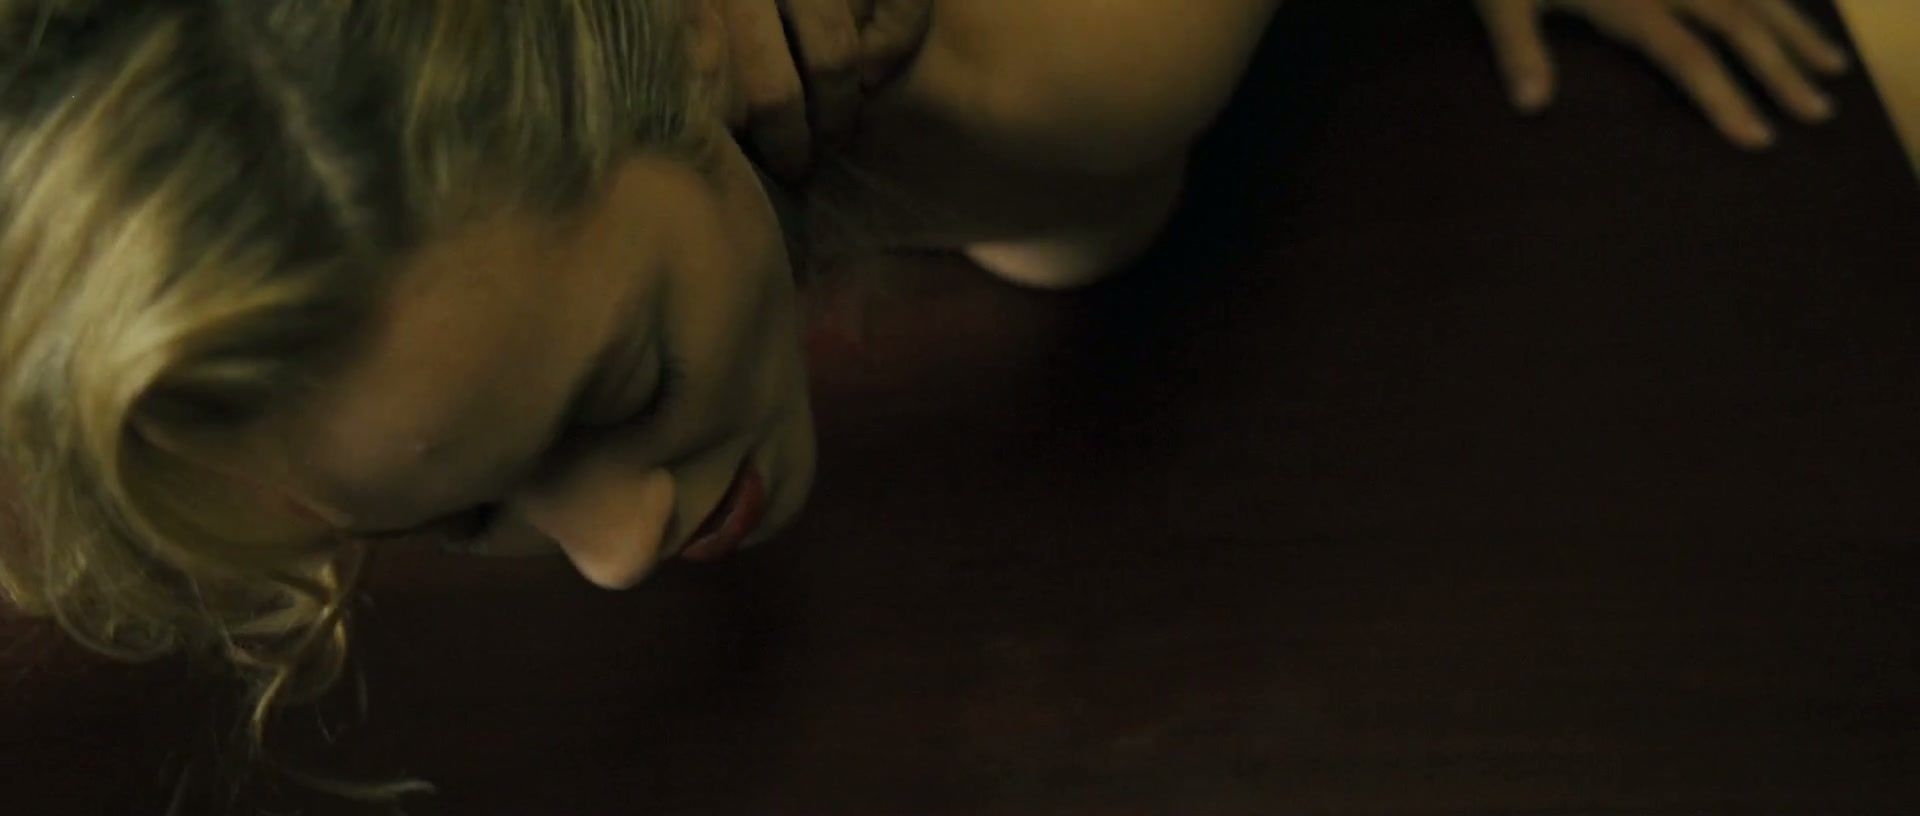 Making Love Porn Naked Marion Cotillard - La boite noire (2005) Storyline